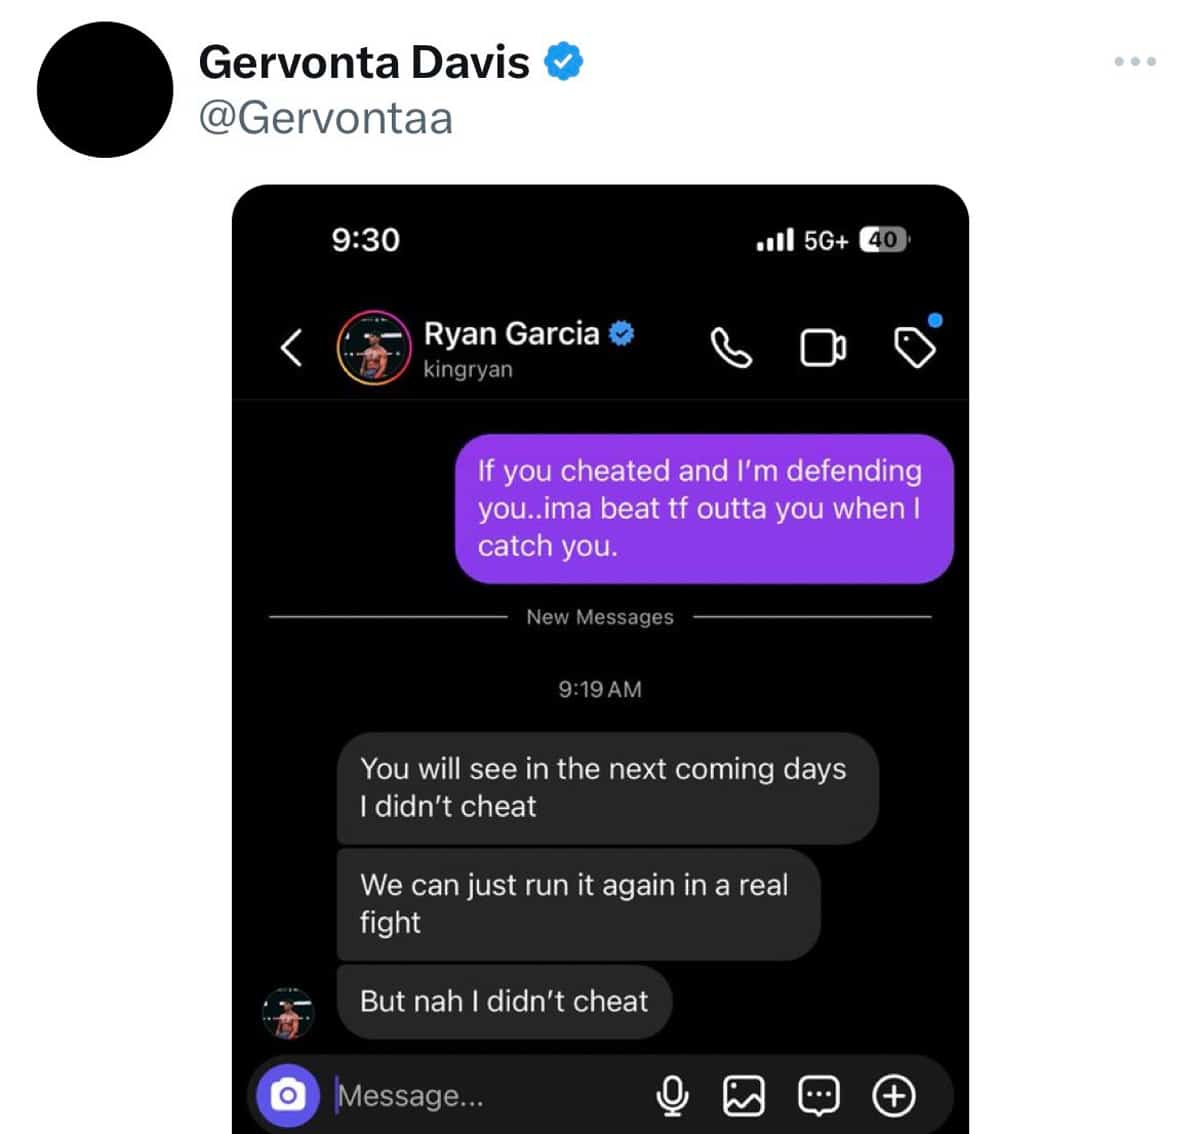 Gervonta Davis Posts Cryptic DM Exchange with Ryan Garcia